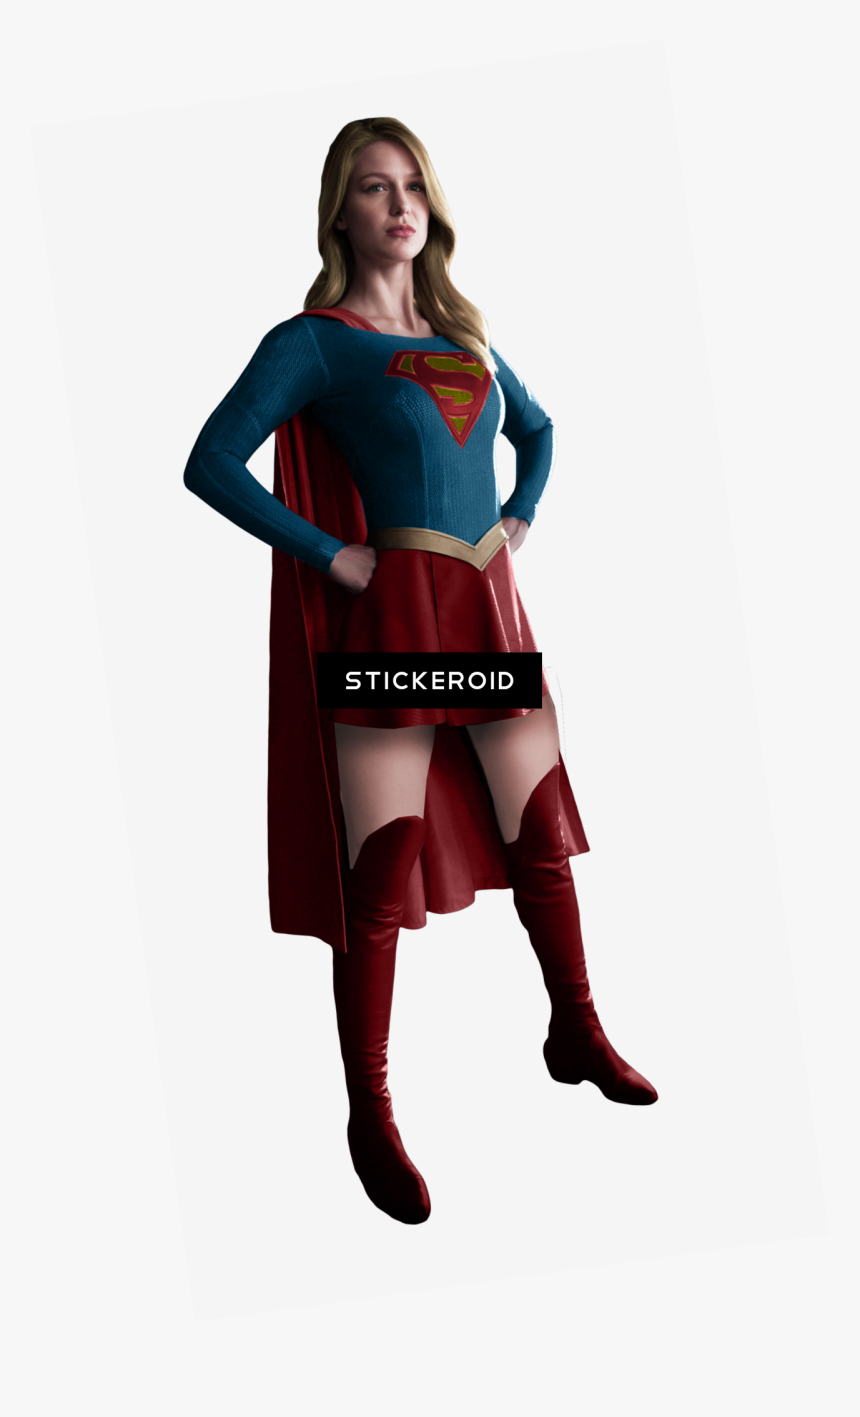 Superman Portable Network Graphics Kara Zor-el Image - Supergirl Transparent, HD Png Download, Free Download